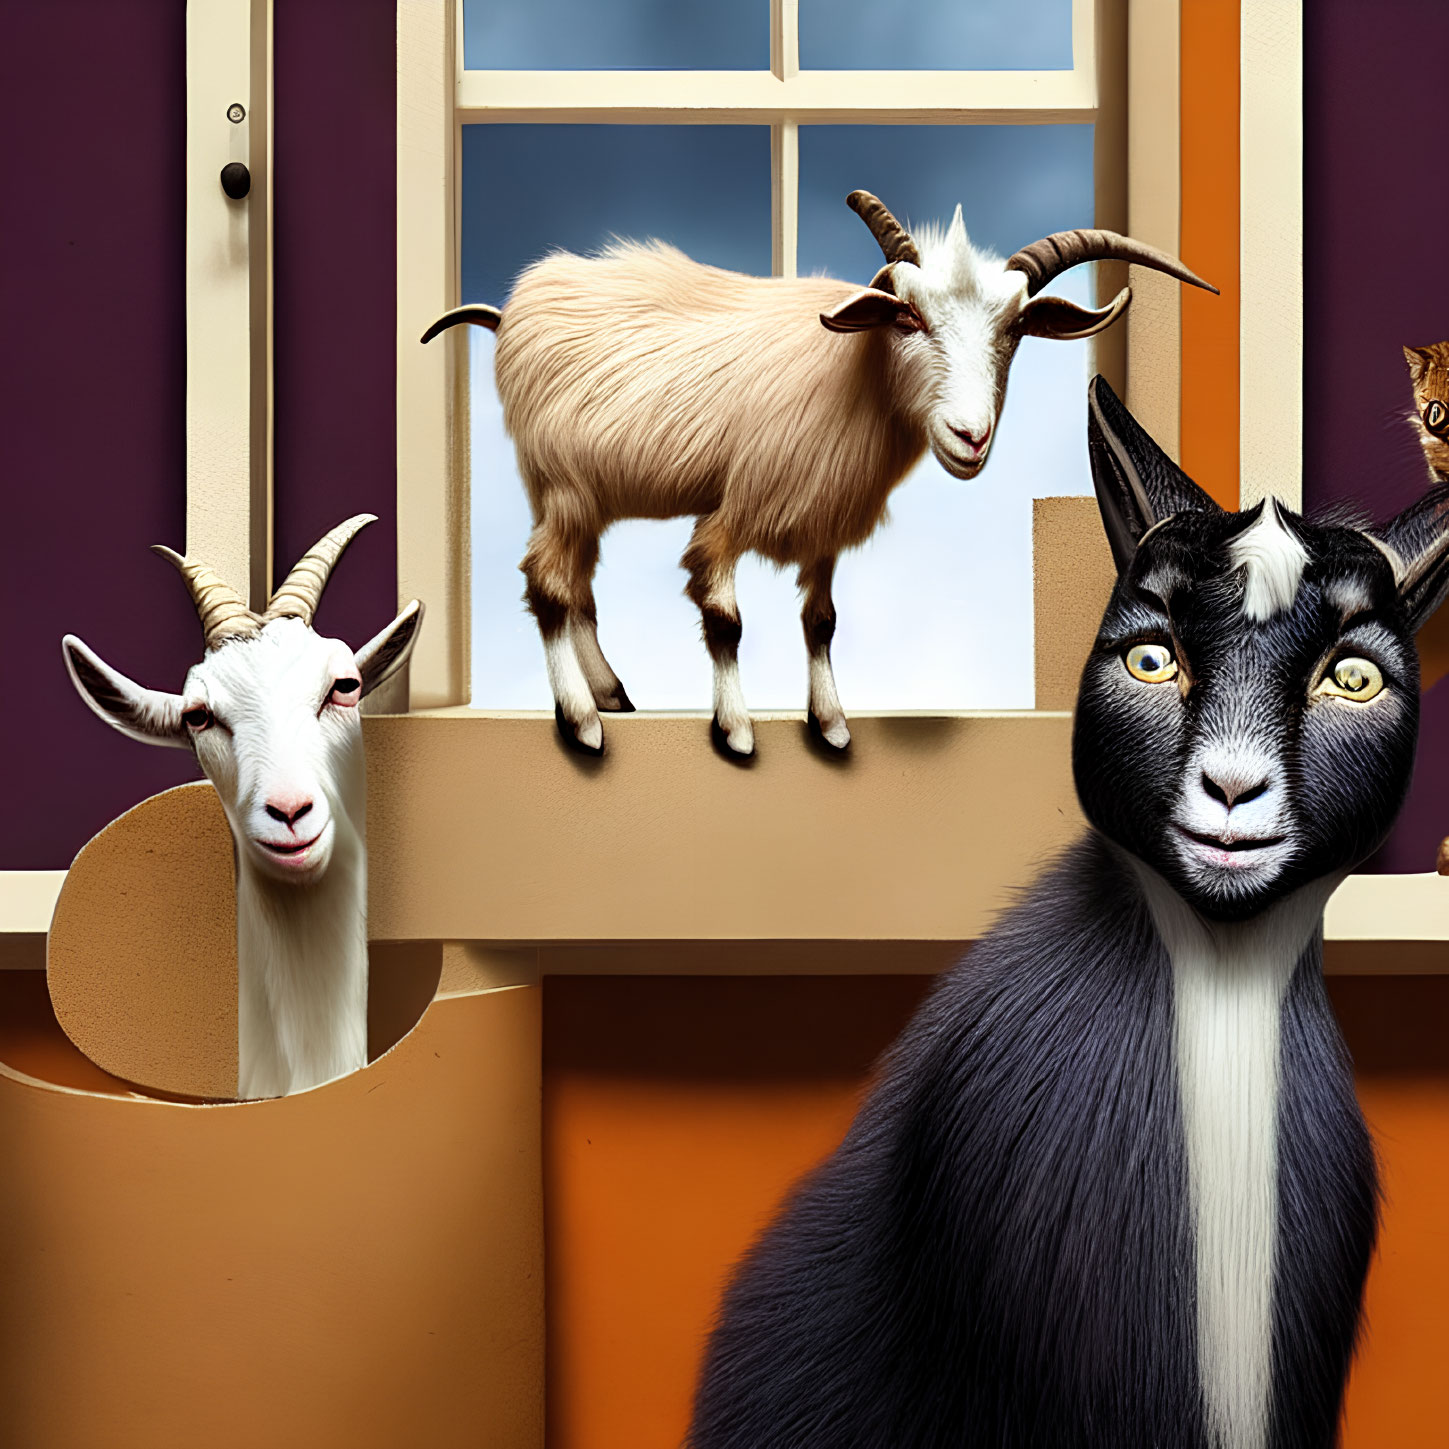 Three goats peek through windows and door of purple house